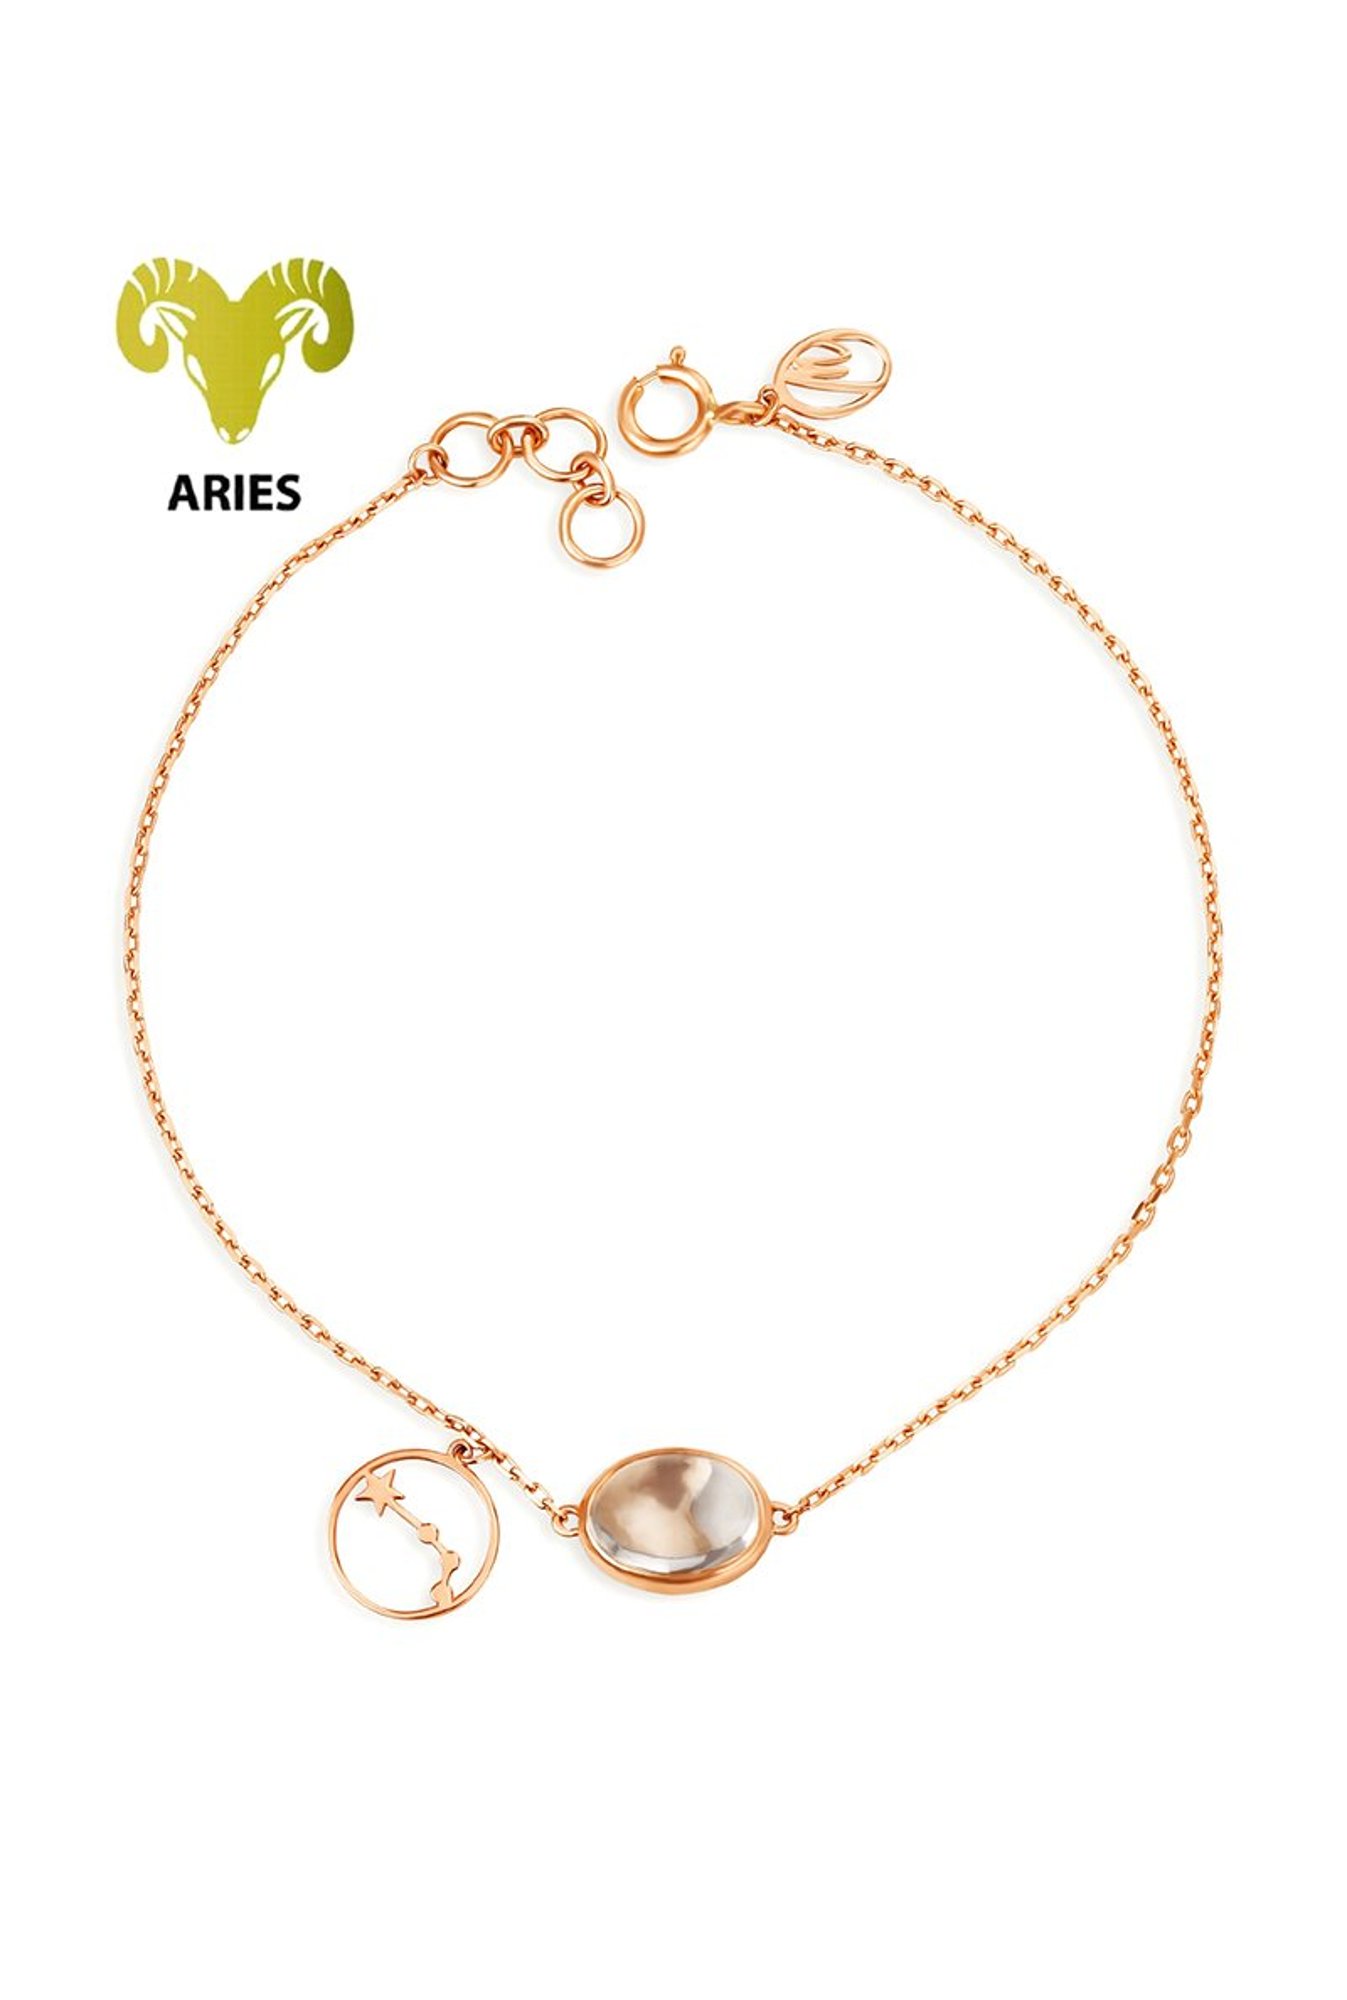 Buy ANTILOOK Gold Plated Free Size Designer Bangle / Bracelet For Women /  Girls Online at Best Prices in India - JioMart.